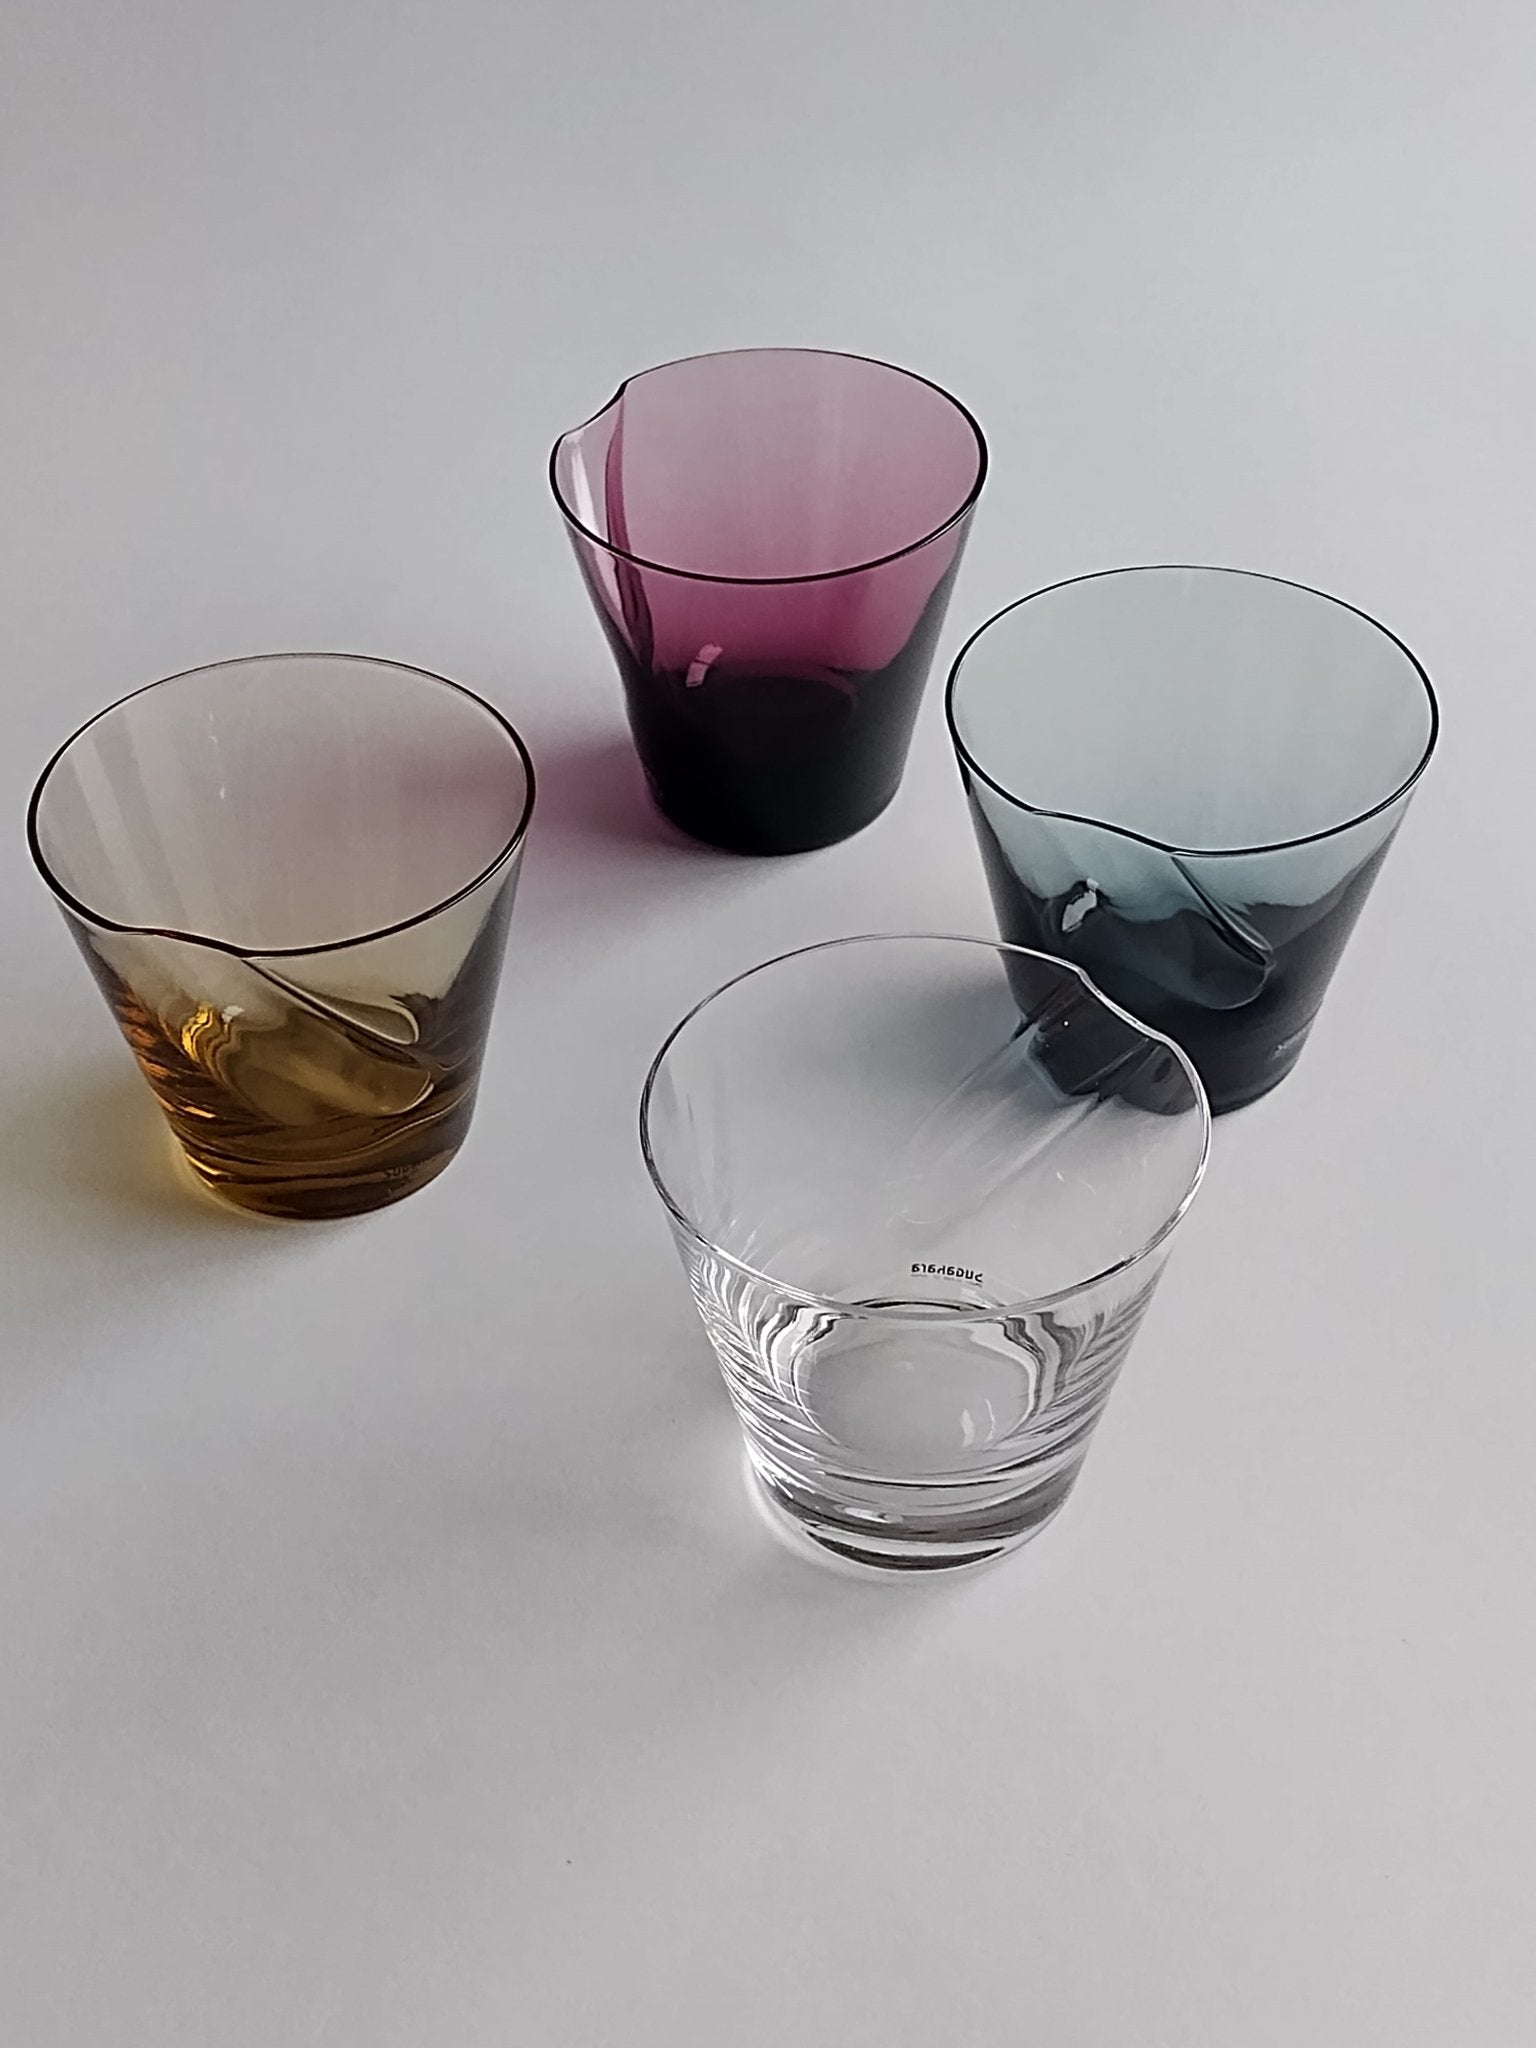 Sugahara-Peco universeel glas 250ml indigo - Schreuder-kraan.shop